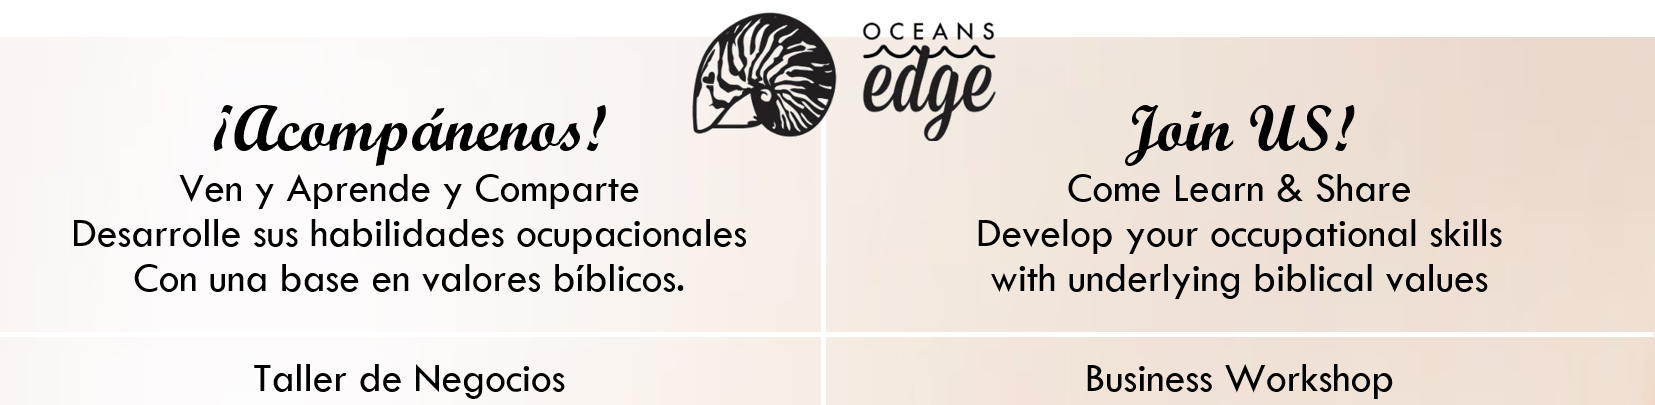 Oceans Edge Jaco beach Taller de negocios business workshop